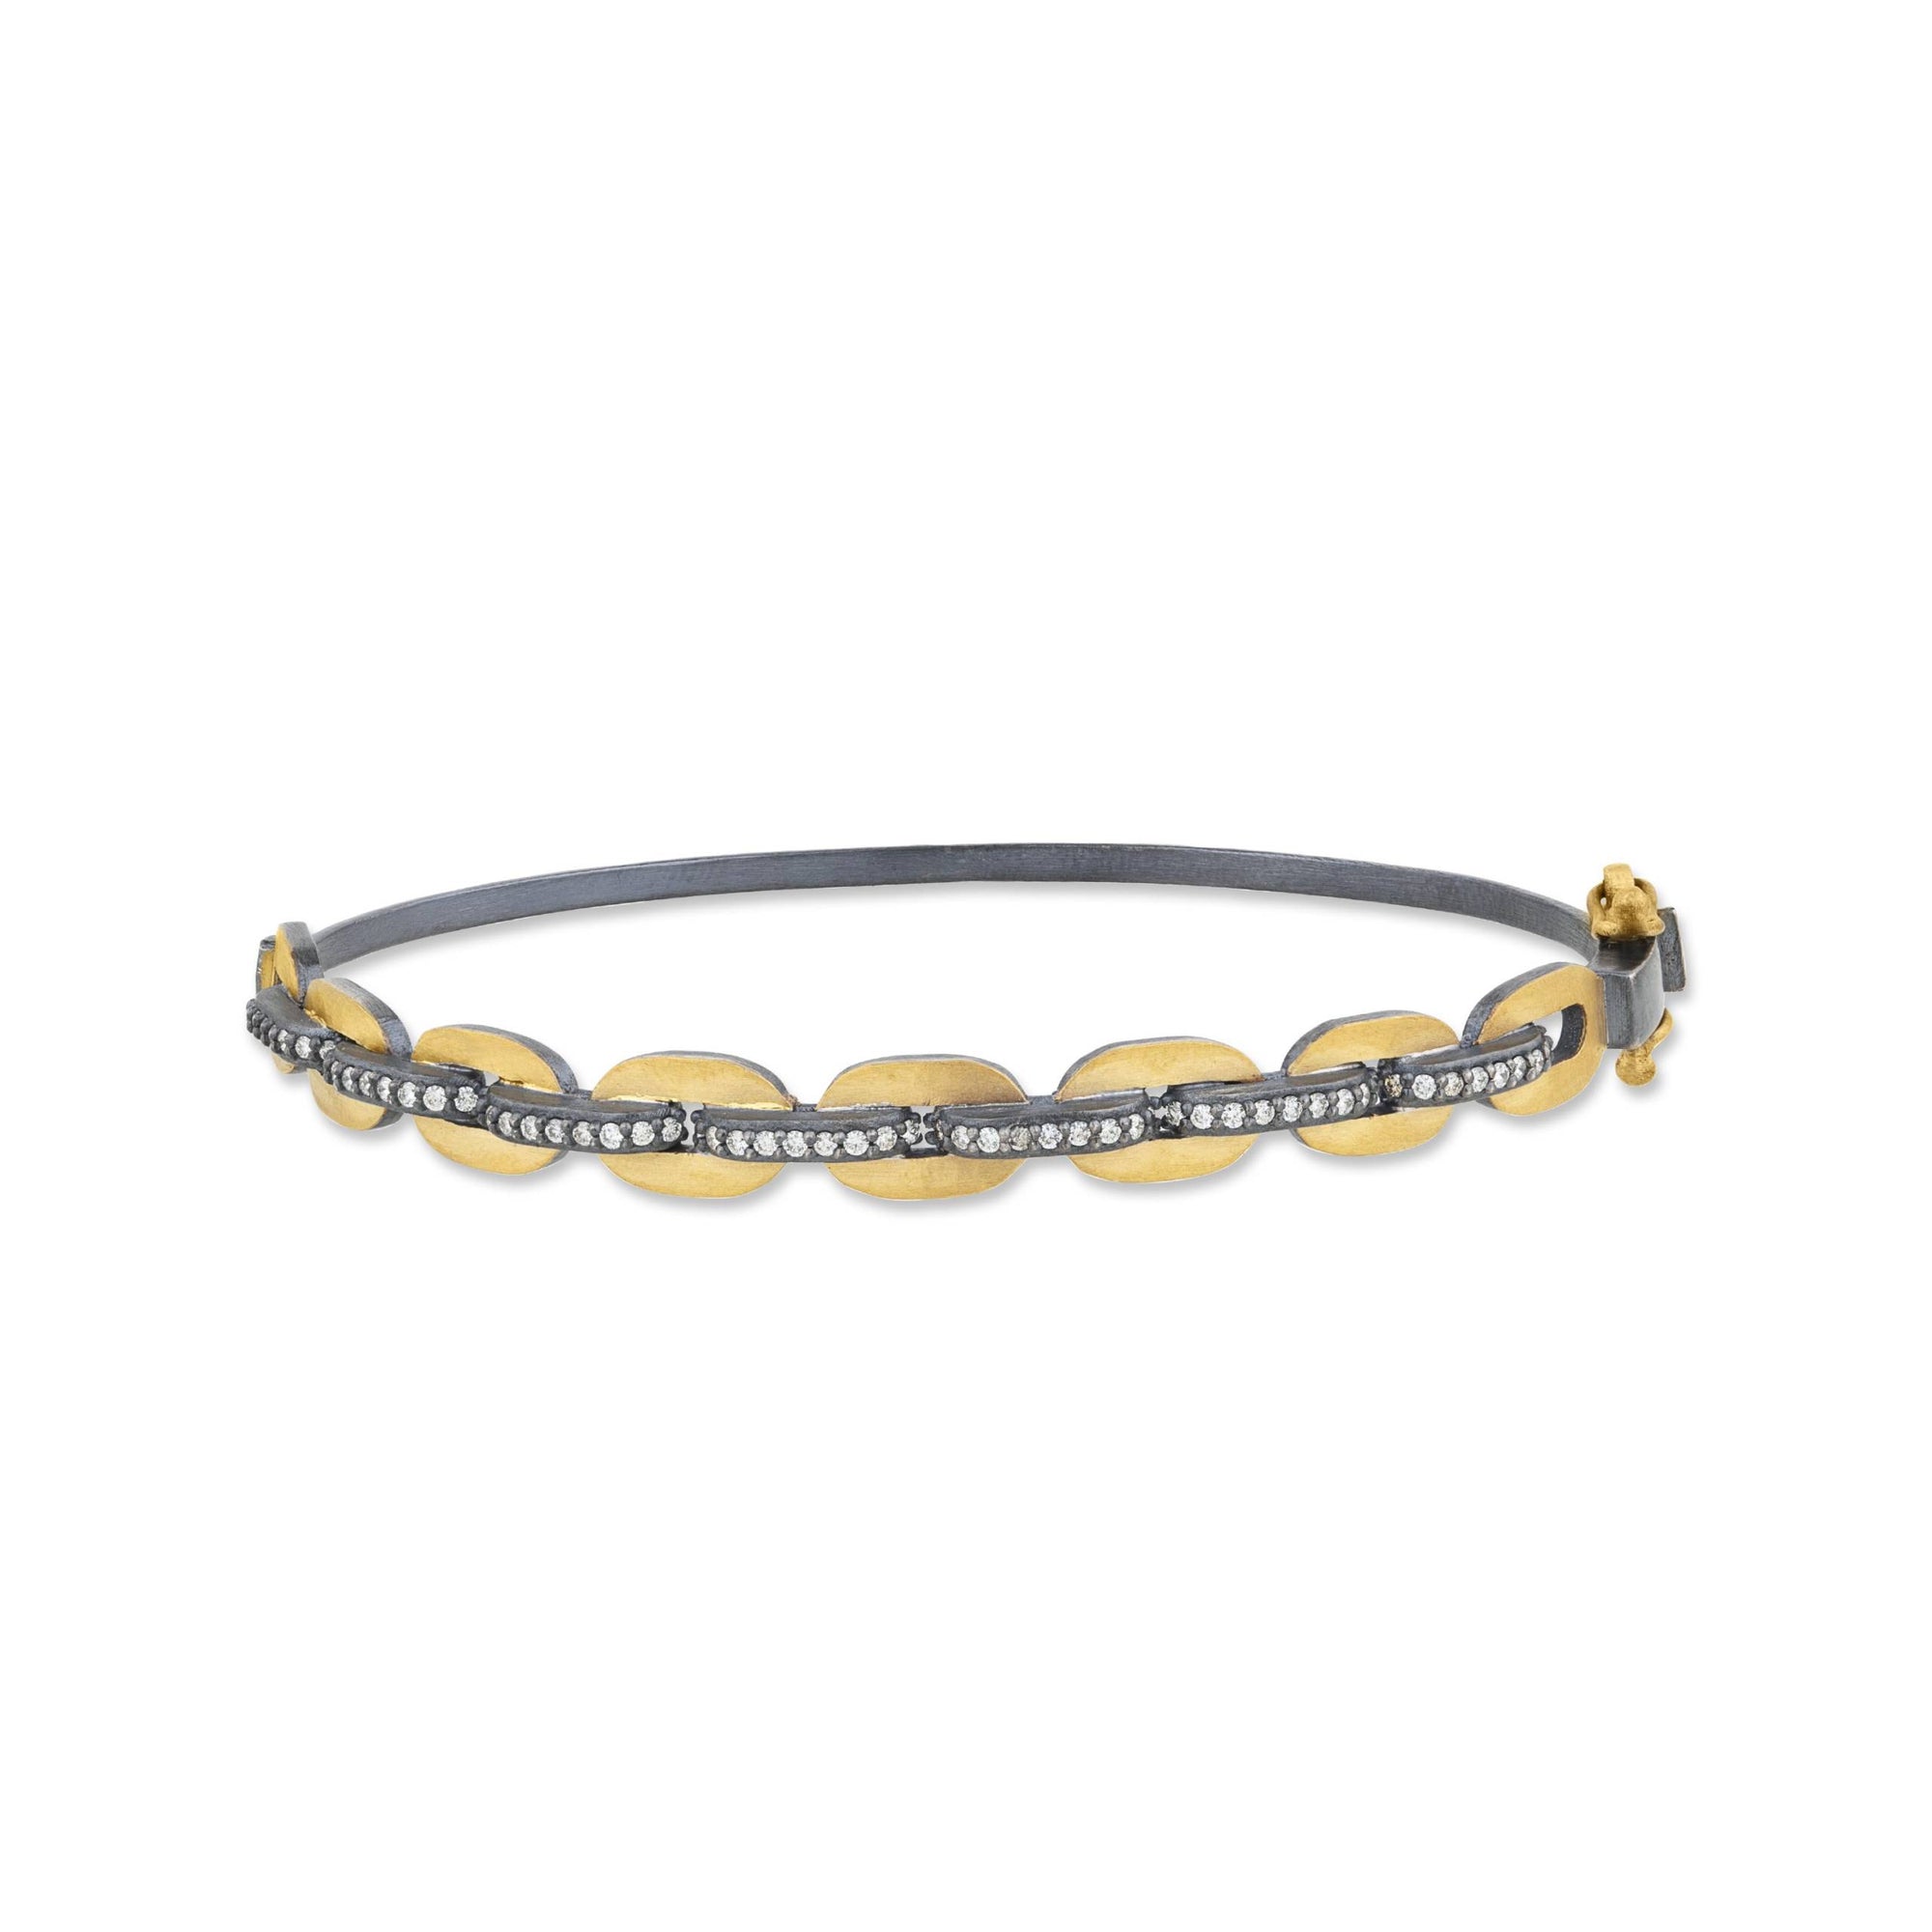 Lika Behar 24K Gold & Oxidized Sterling Silver "Chill-Link" Bangle Bracelet